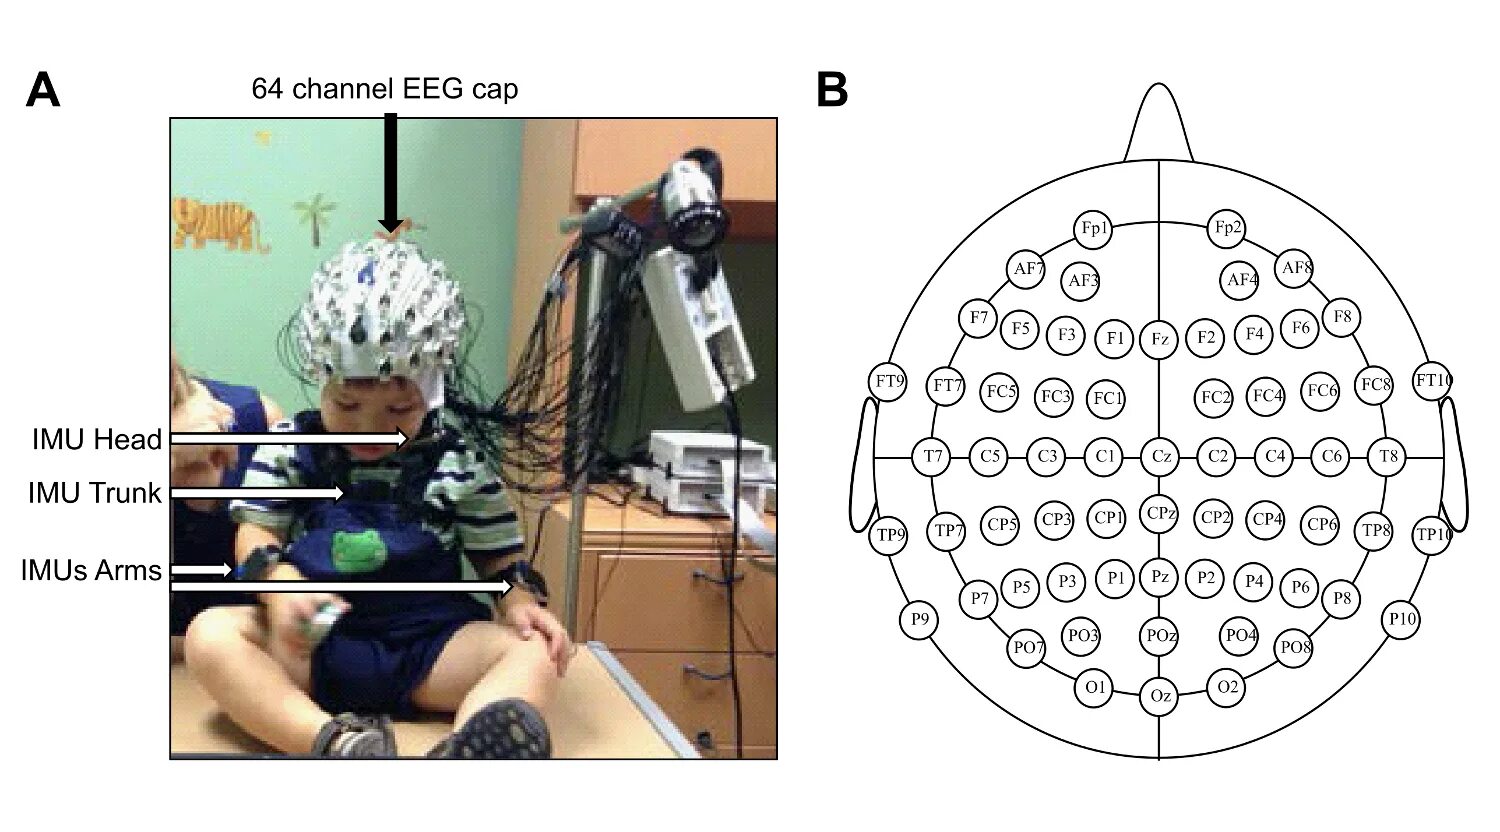 Ээг новокузнецк. Расположение электродов ЭЭГ. ЭЭГ мониторинг головного мозга. ЭЭГ шапочка схема. Электроэнцефалография головного мозга (ЭЭГ).